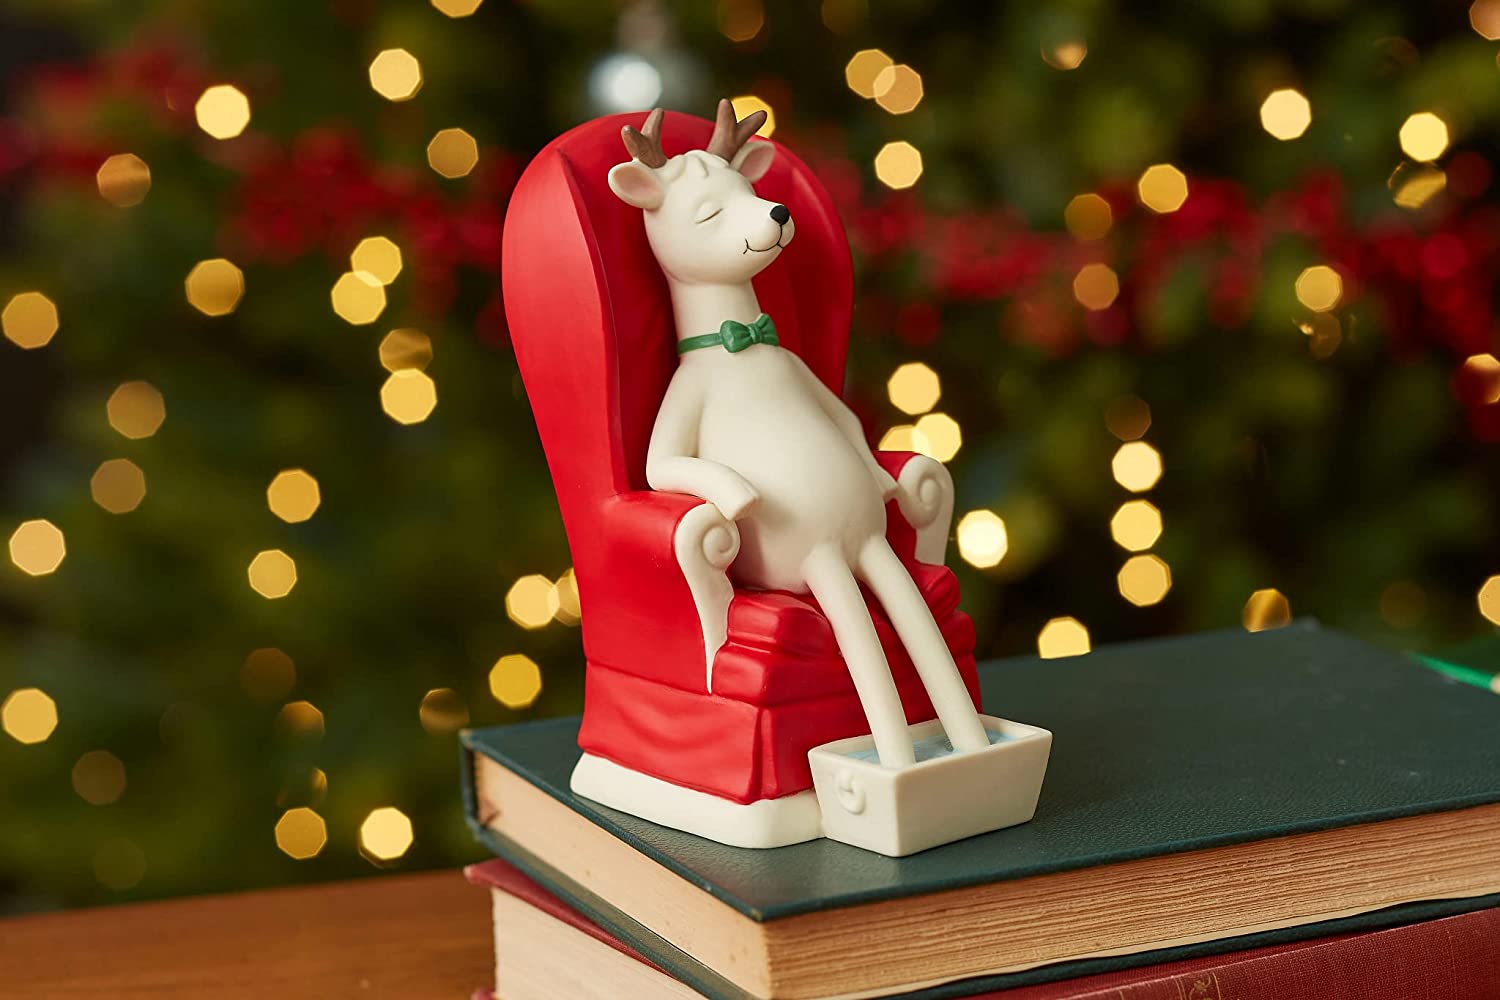 Department 56 Snowbabies Christmas Memories Santa's Reindeer Rest and Relaxation Figurine, 5.35 Inch